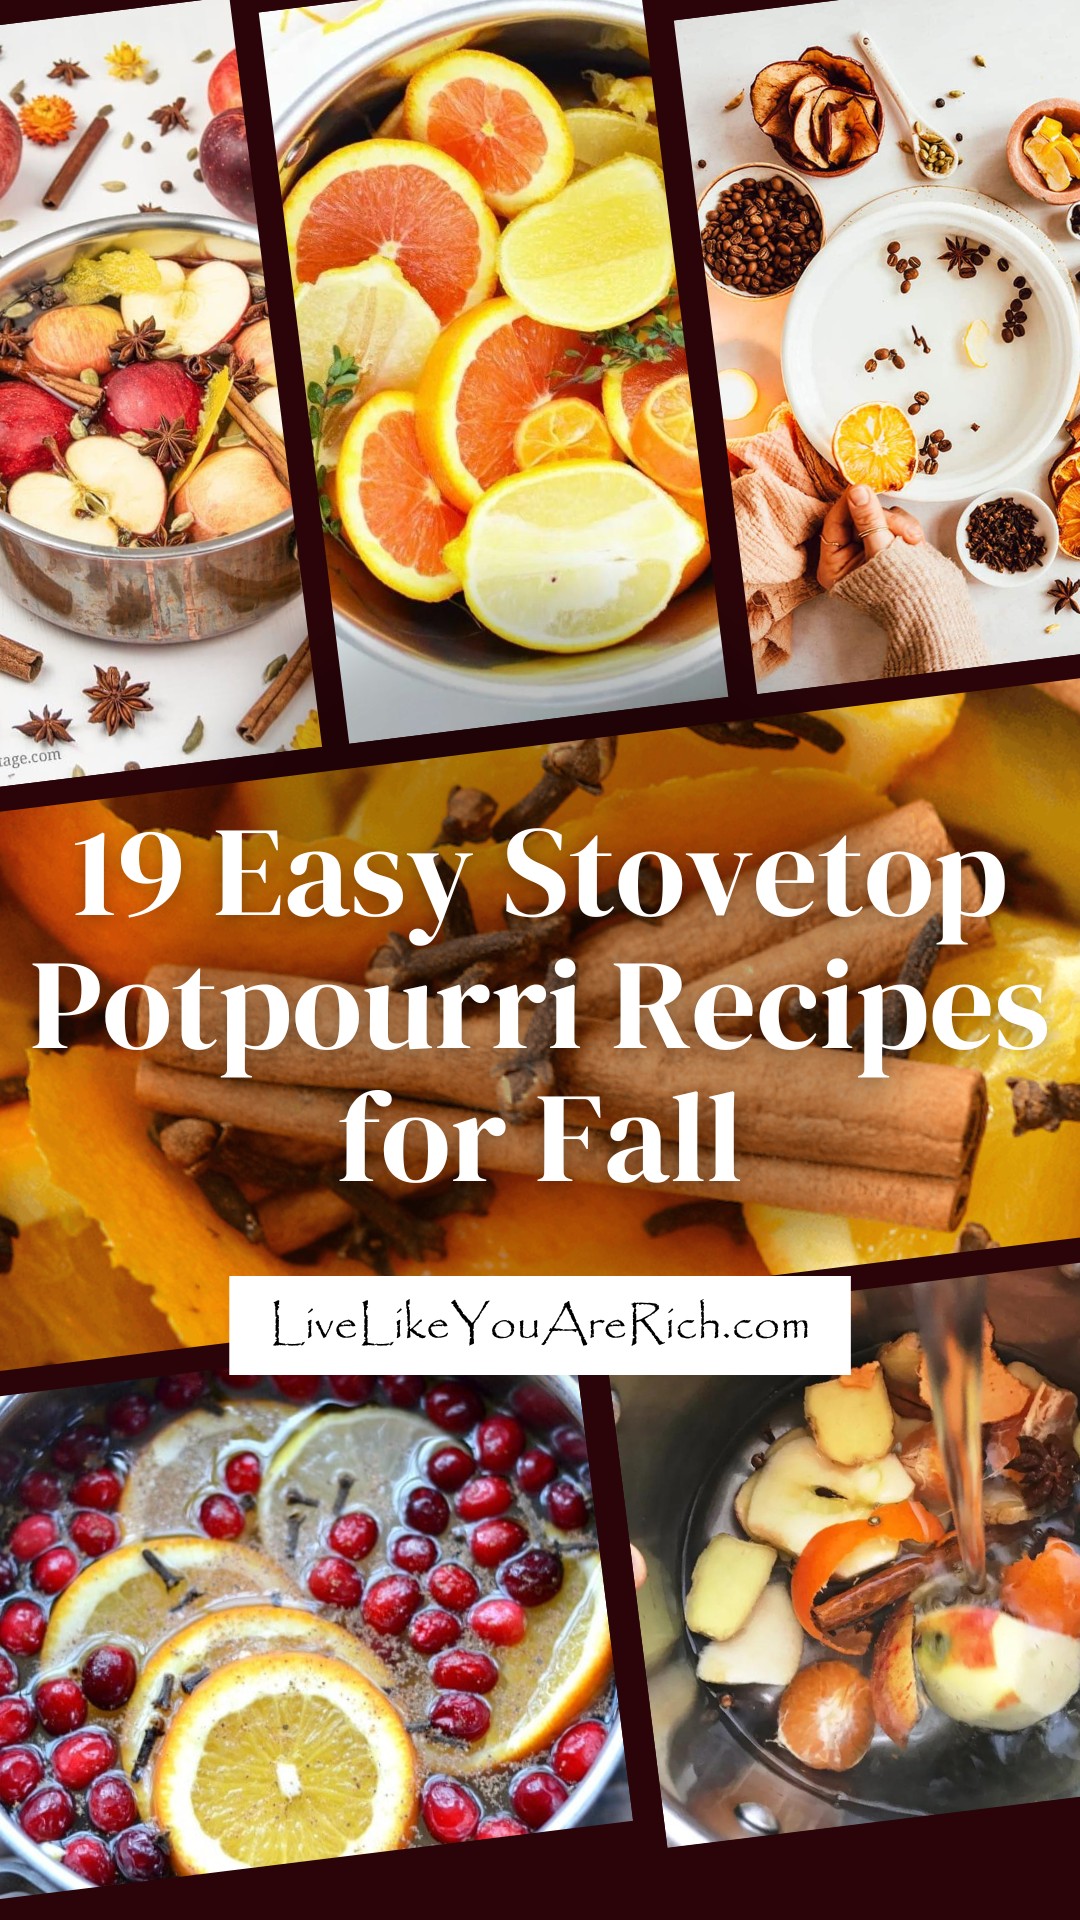 19 Easy Stovetop Potpourri Recipes for Fall